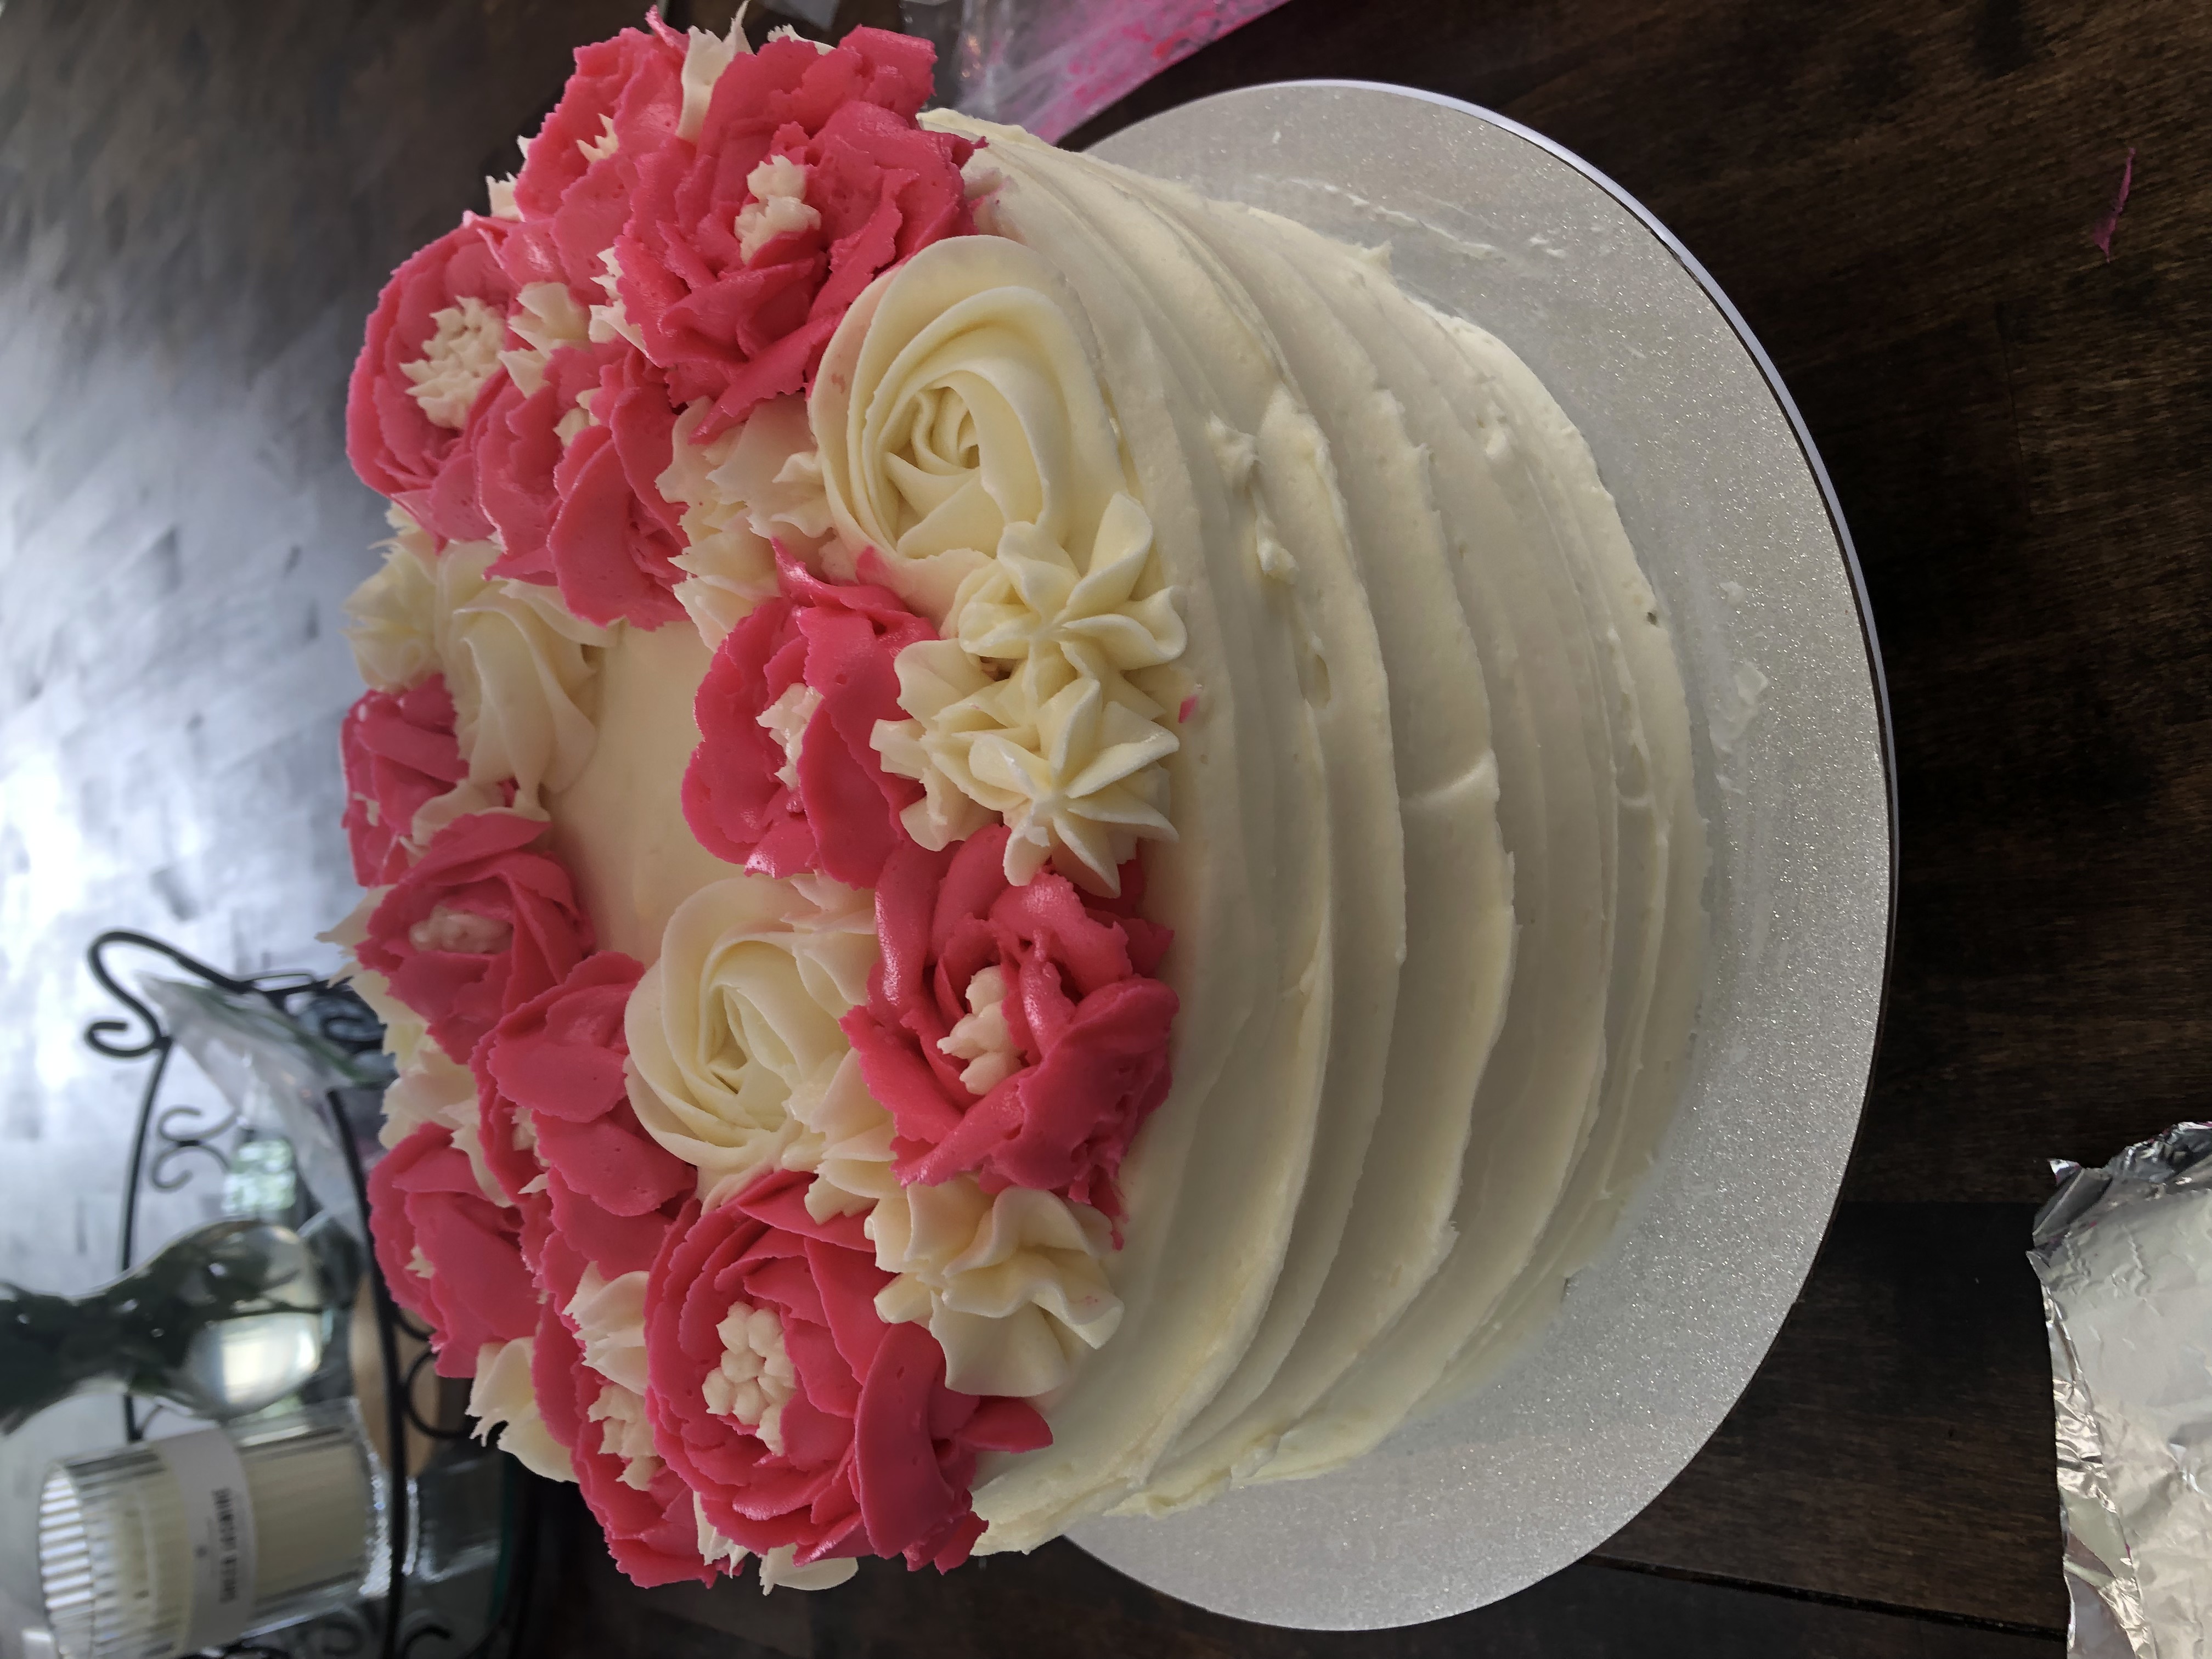 50th birthday cake with vanilla buttercream flowers.